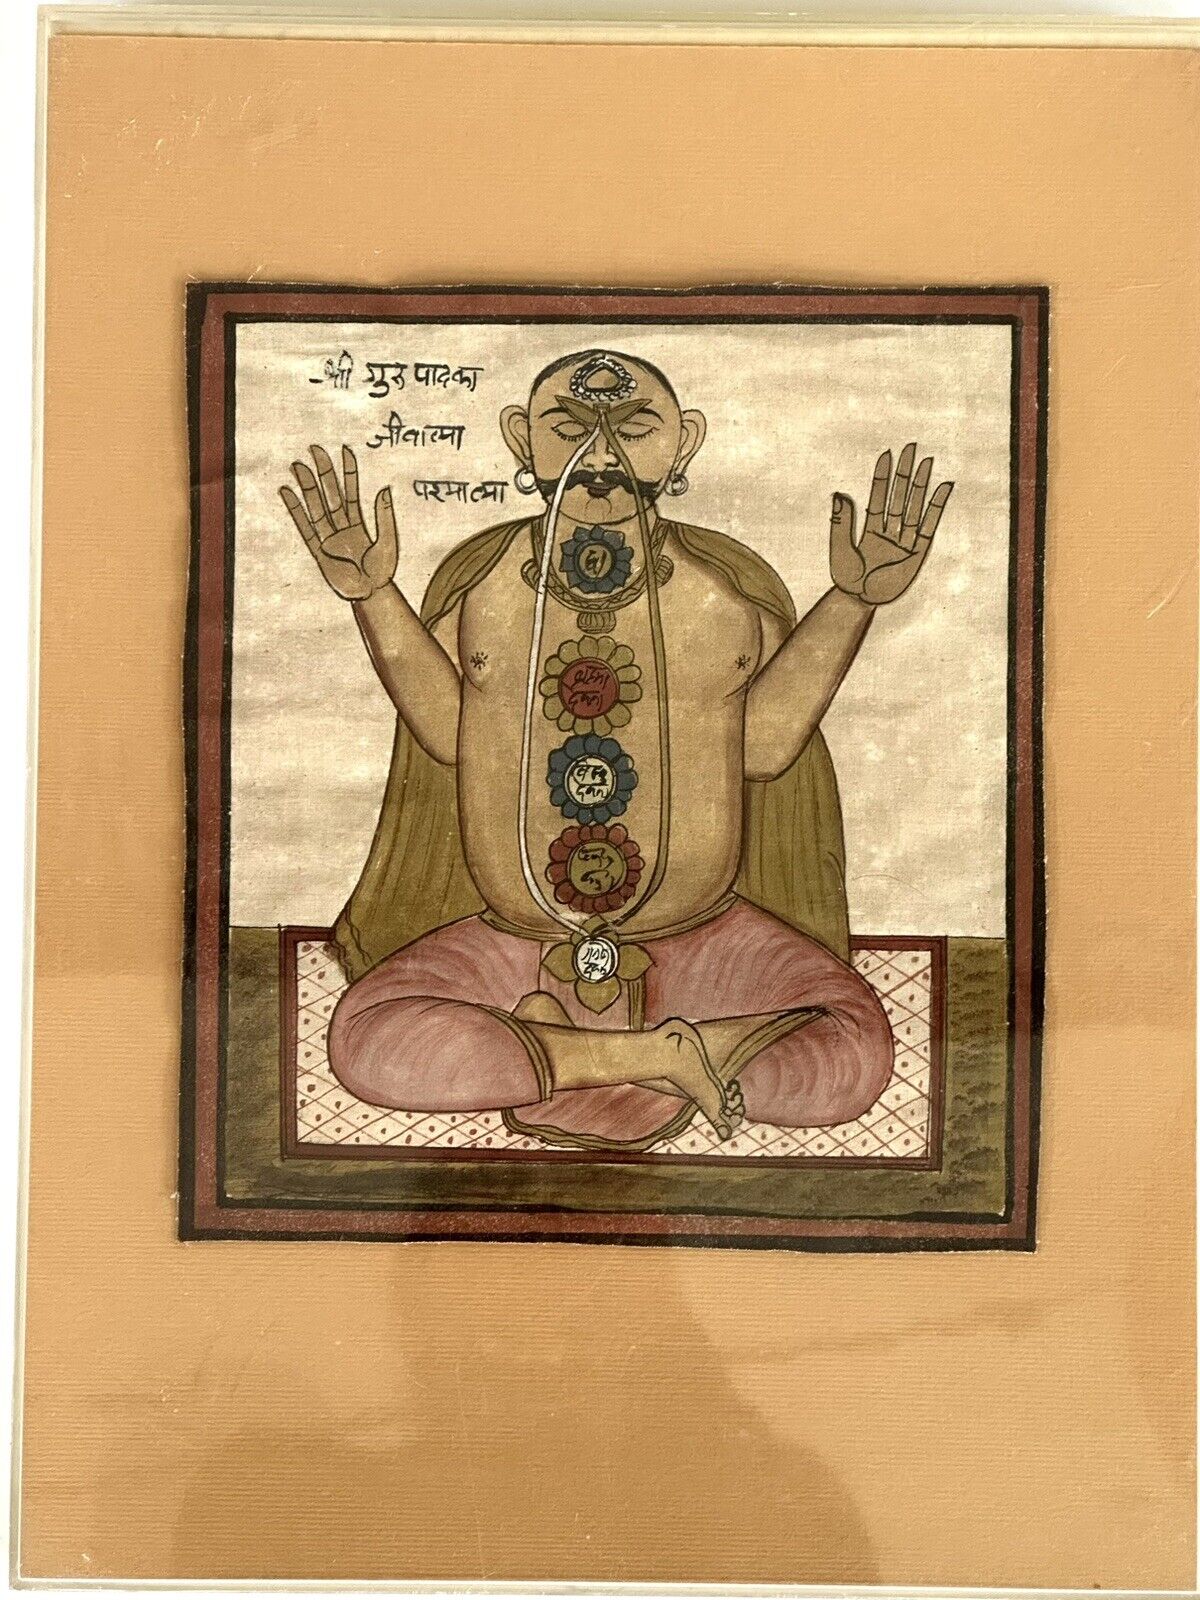 Limited Edition Vintage Kalpasutra Jain Ancient Illustration Artwork 9x9.5 Inch